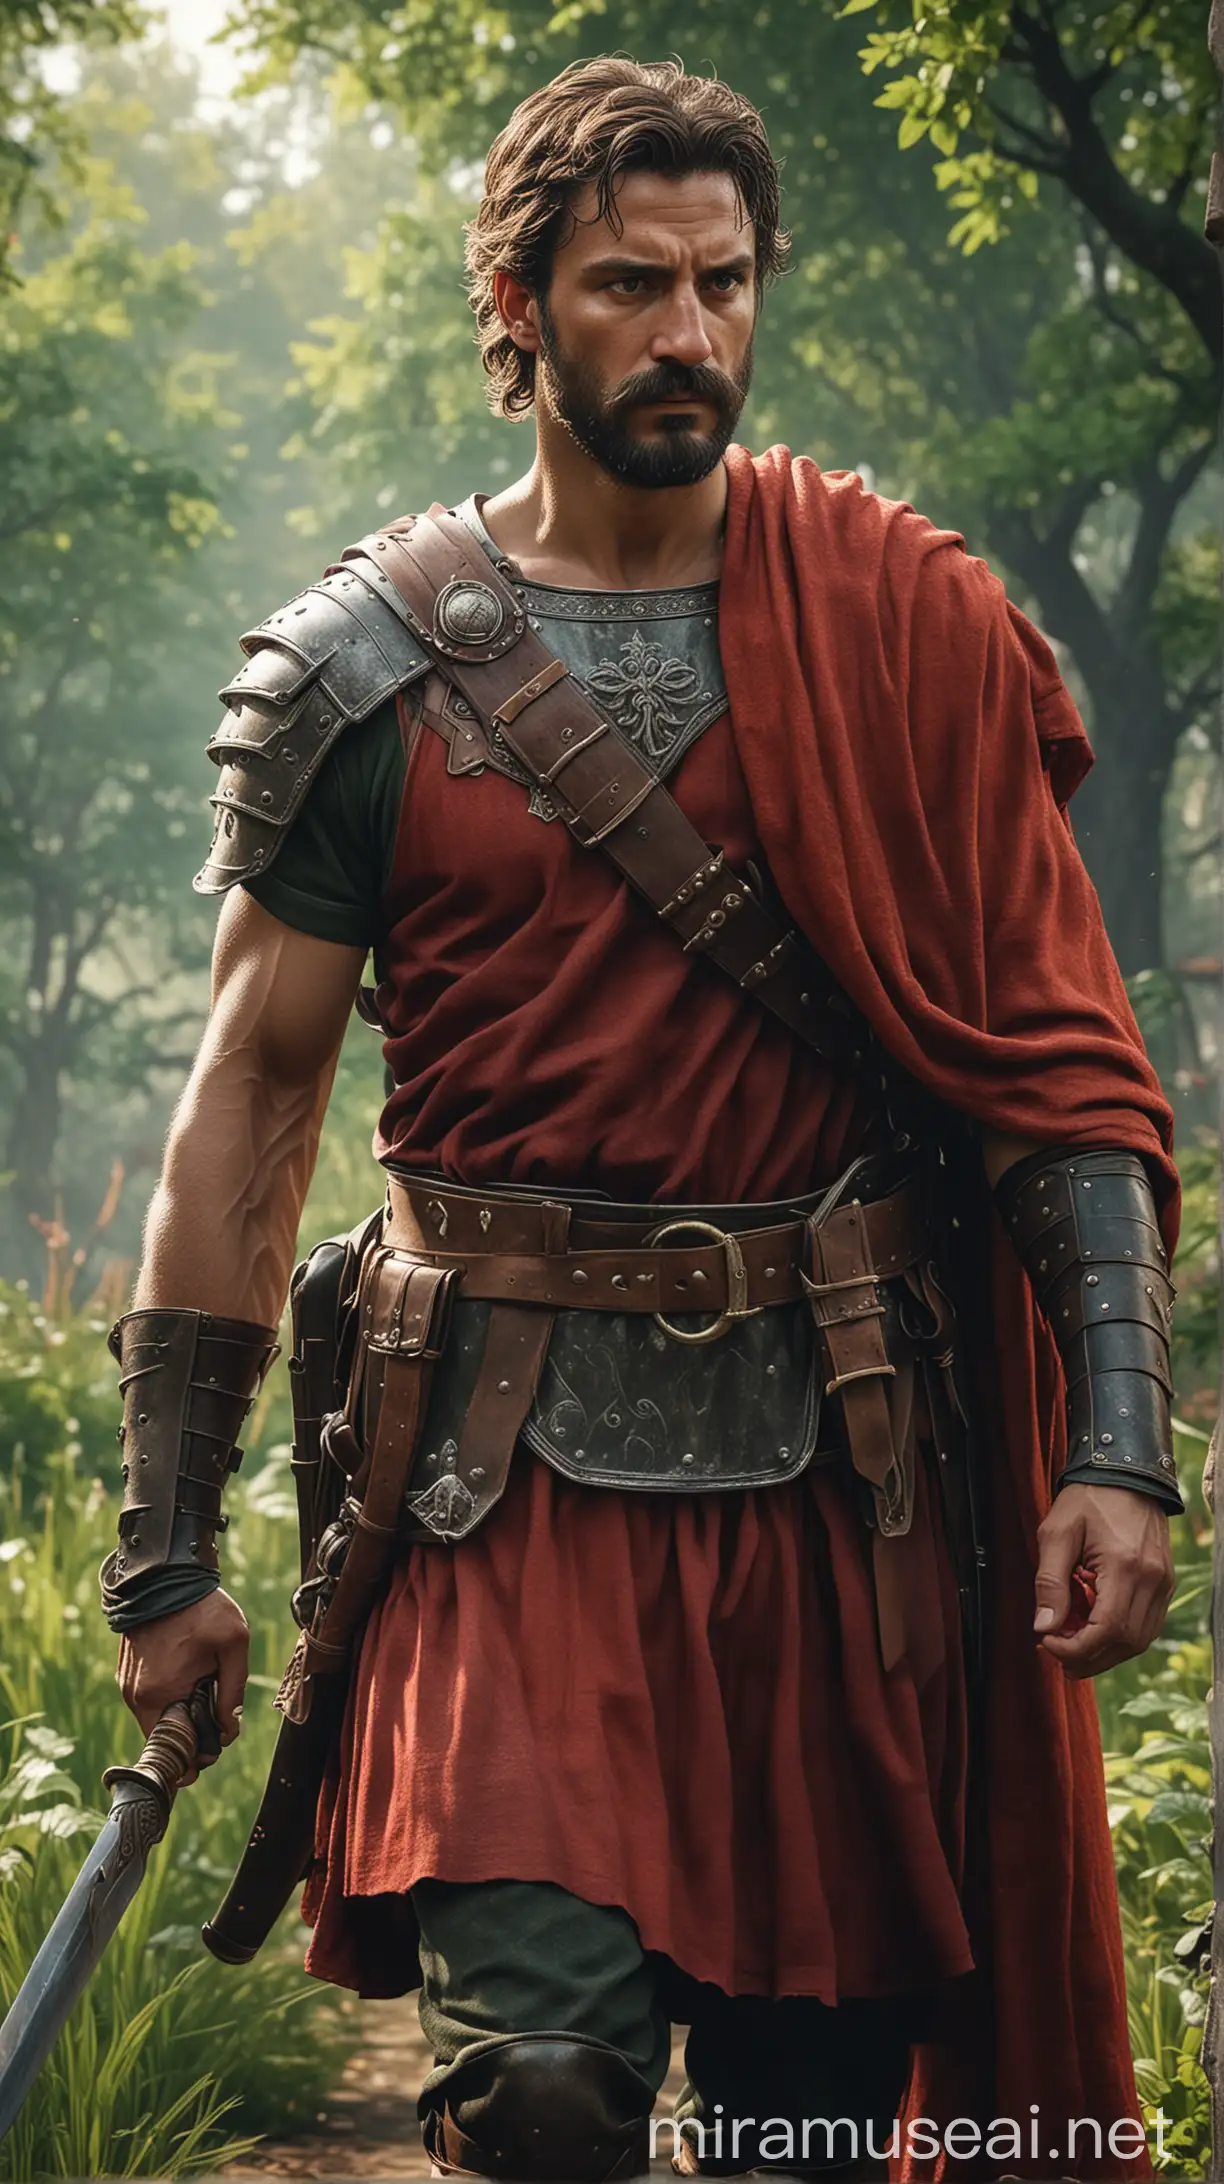 Medieval Roman Warrior in Red Battle Attire Roaming Green Terrain